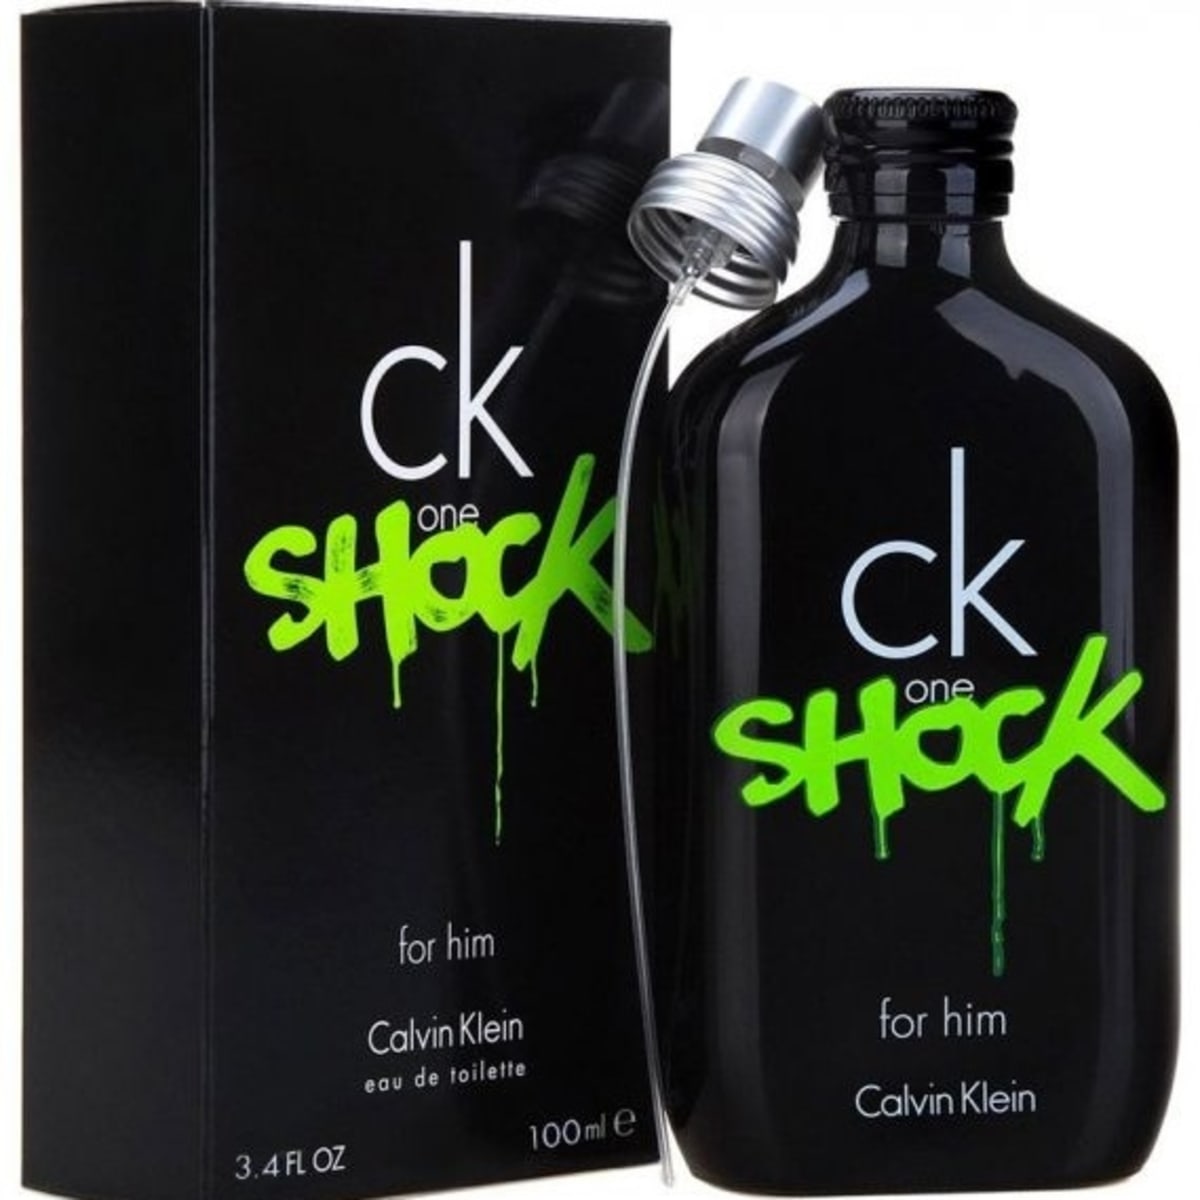 Calvin Klein CK One Shock Eau De Toilette For Him - 100ml